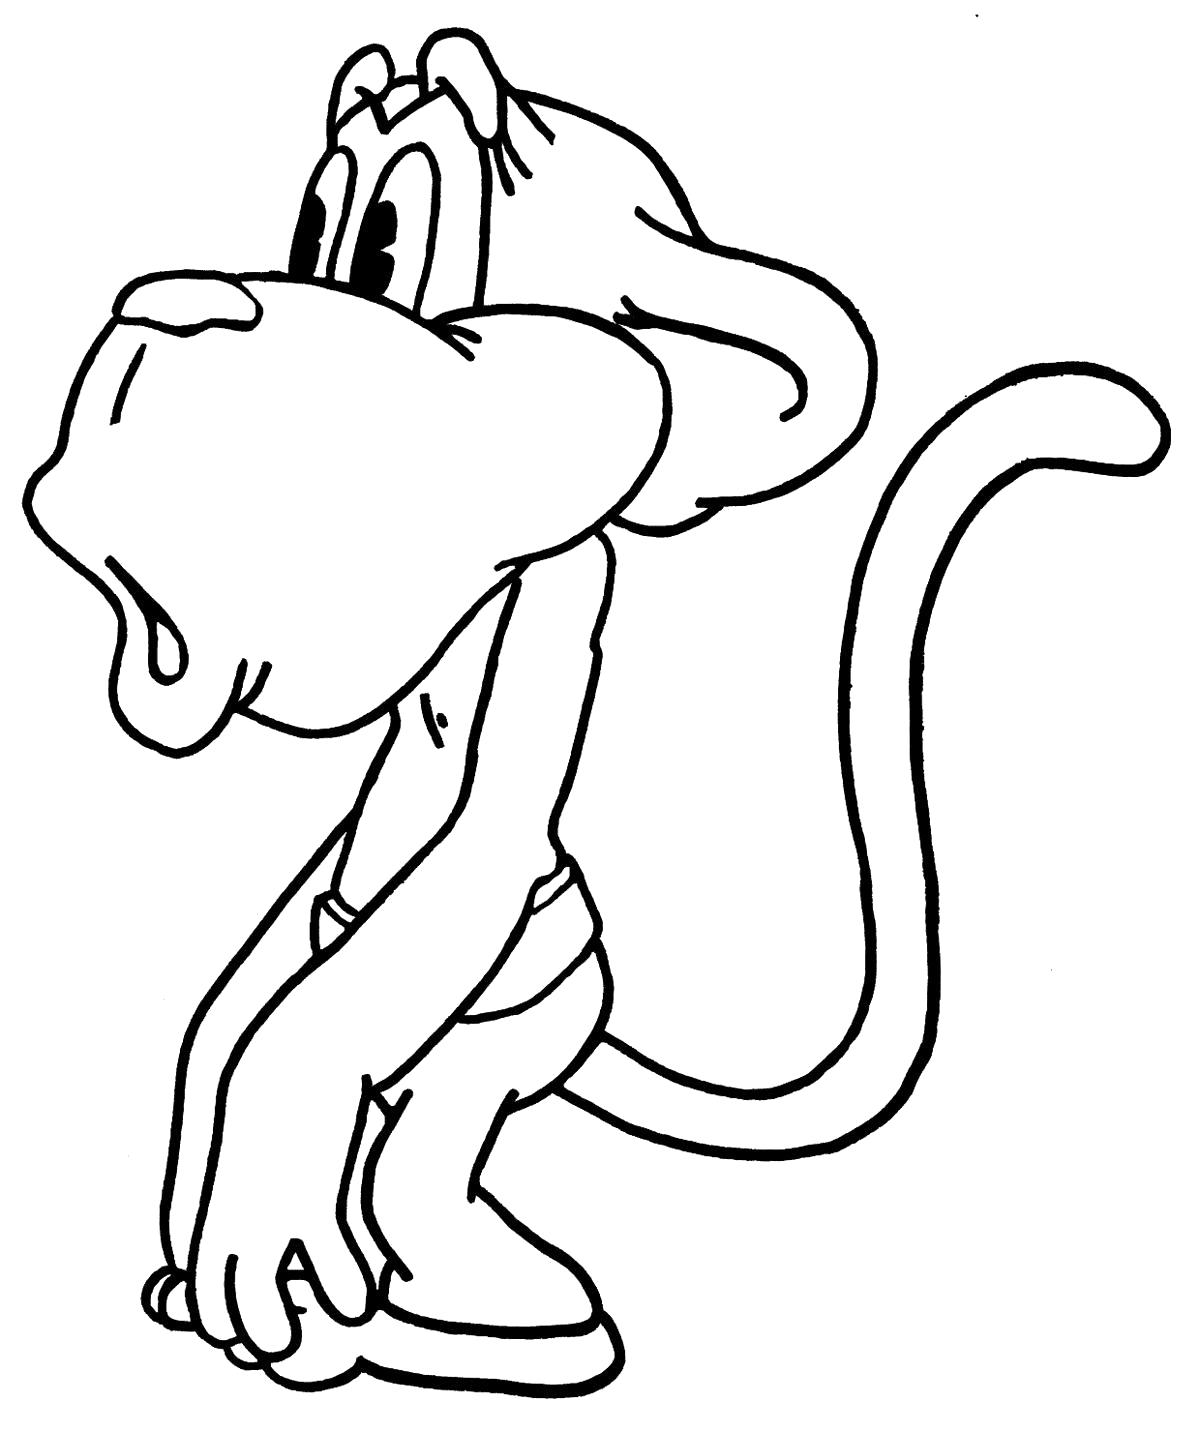 Название: Раскраска обезьянка удивлена. Категория: обезьяна. Теги: обезьяна.